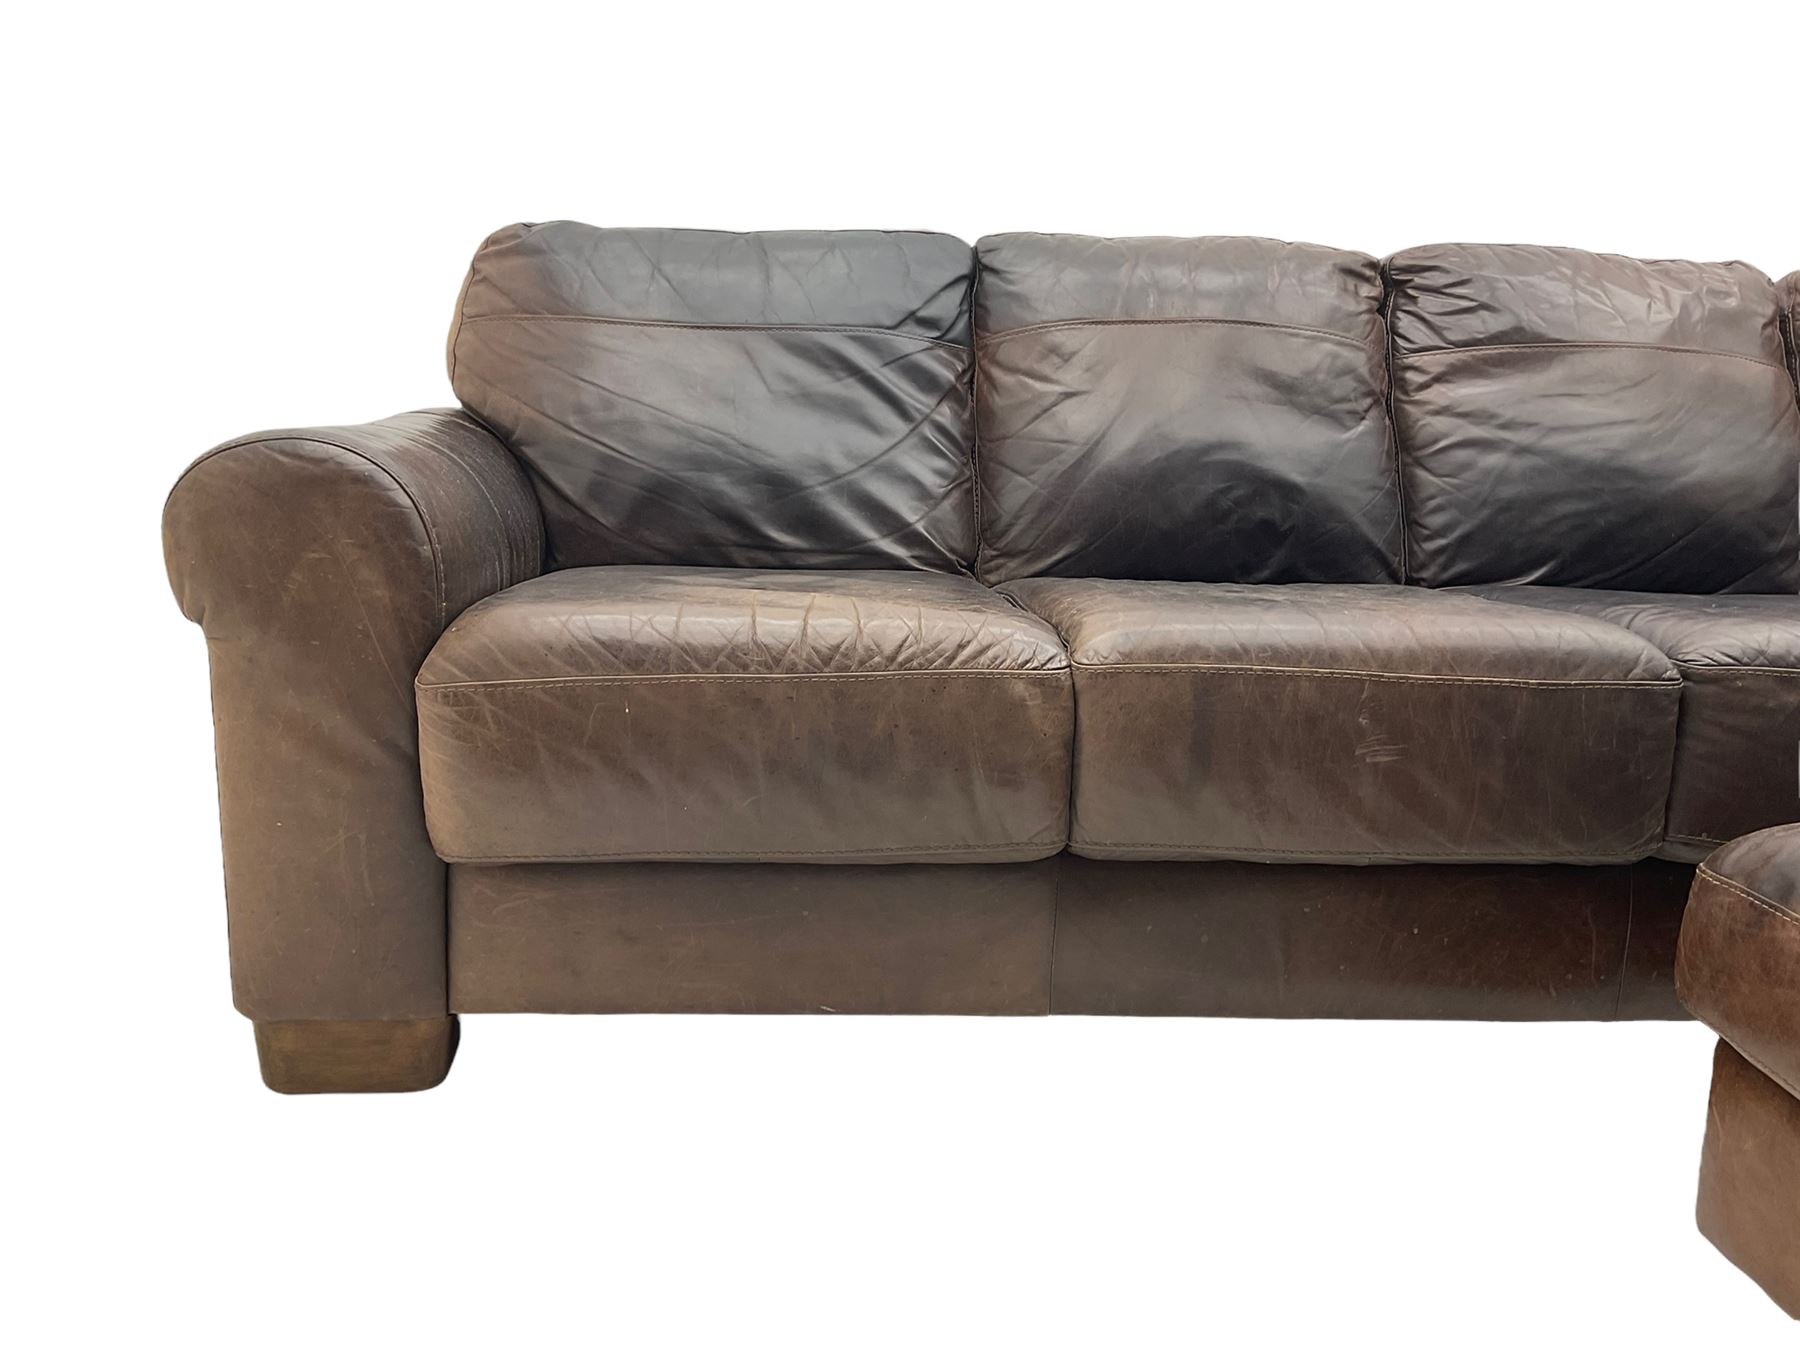 Sofitalia - corner sofa upholstered in tan waxed leather - Image 5 of 6